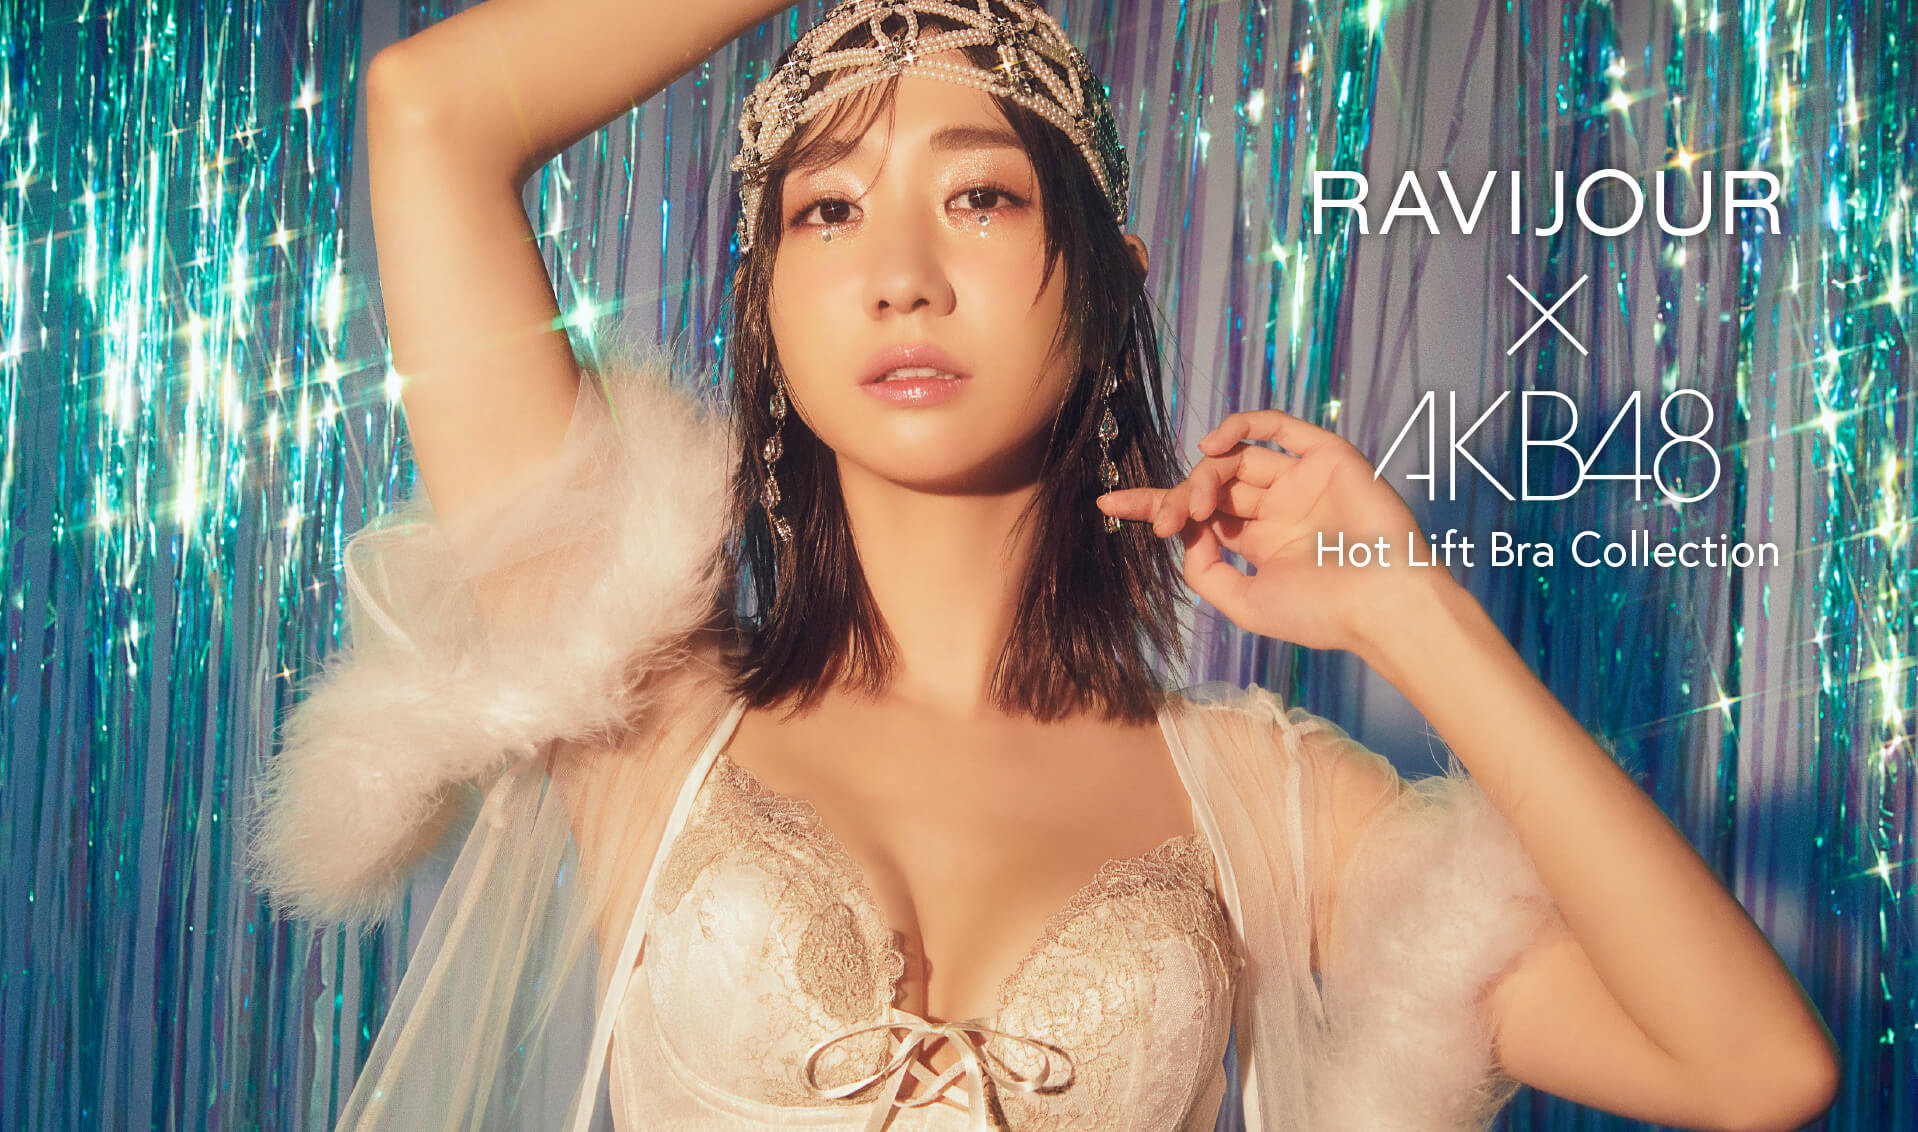 AKB48 x RAVIJOUR Hot Lift Bra Collection